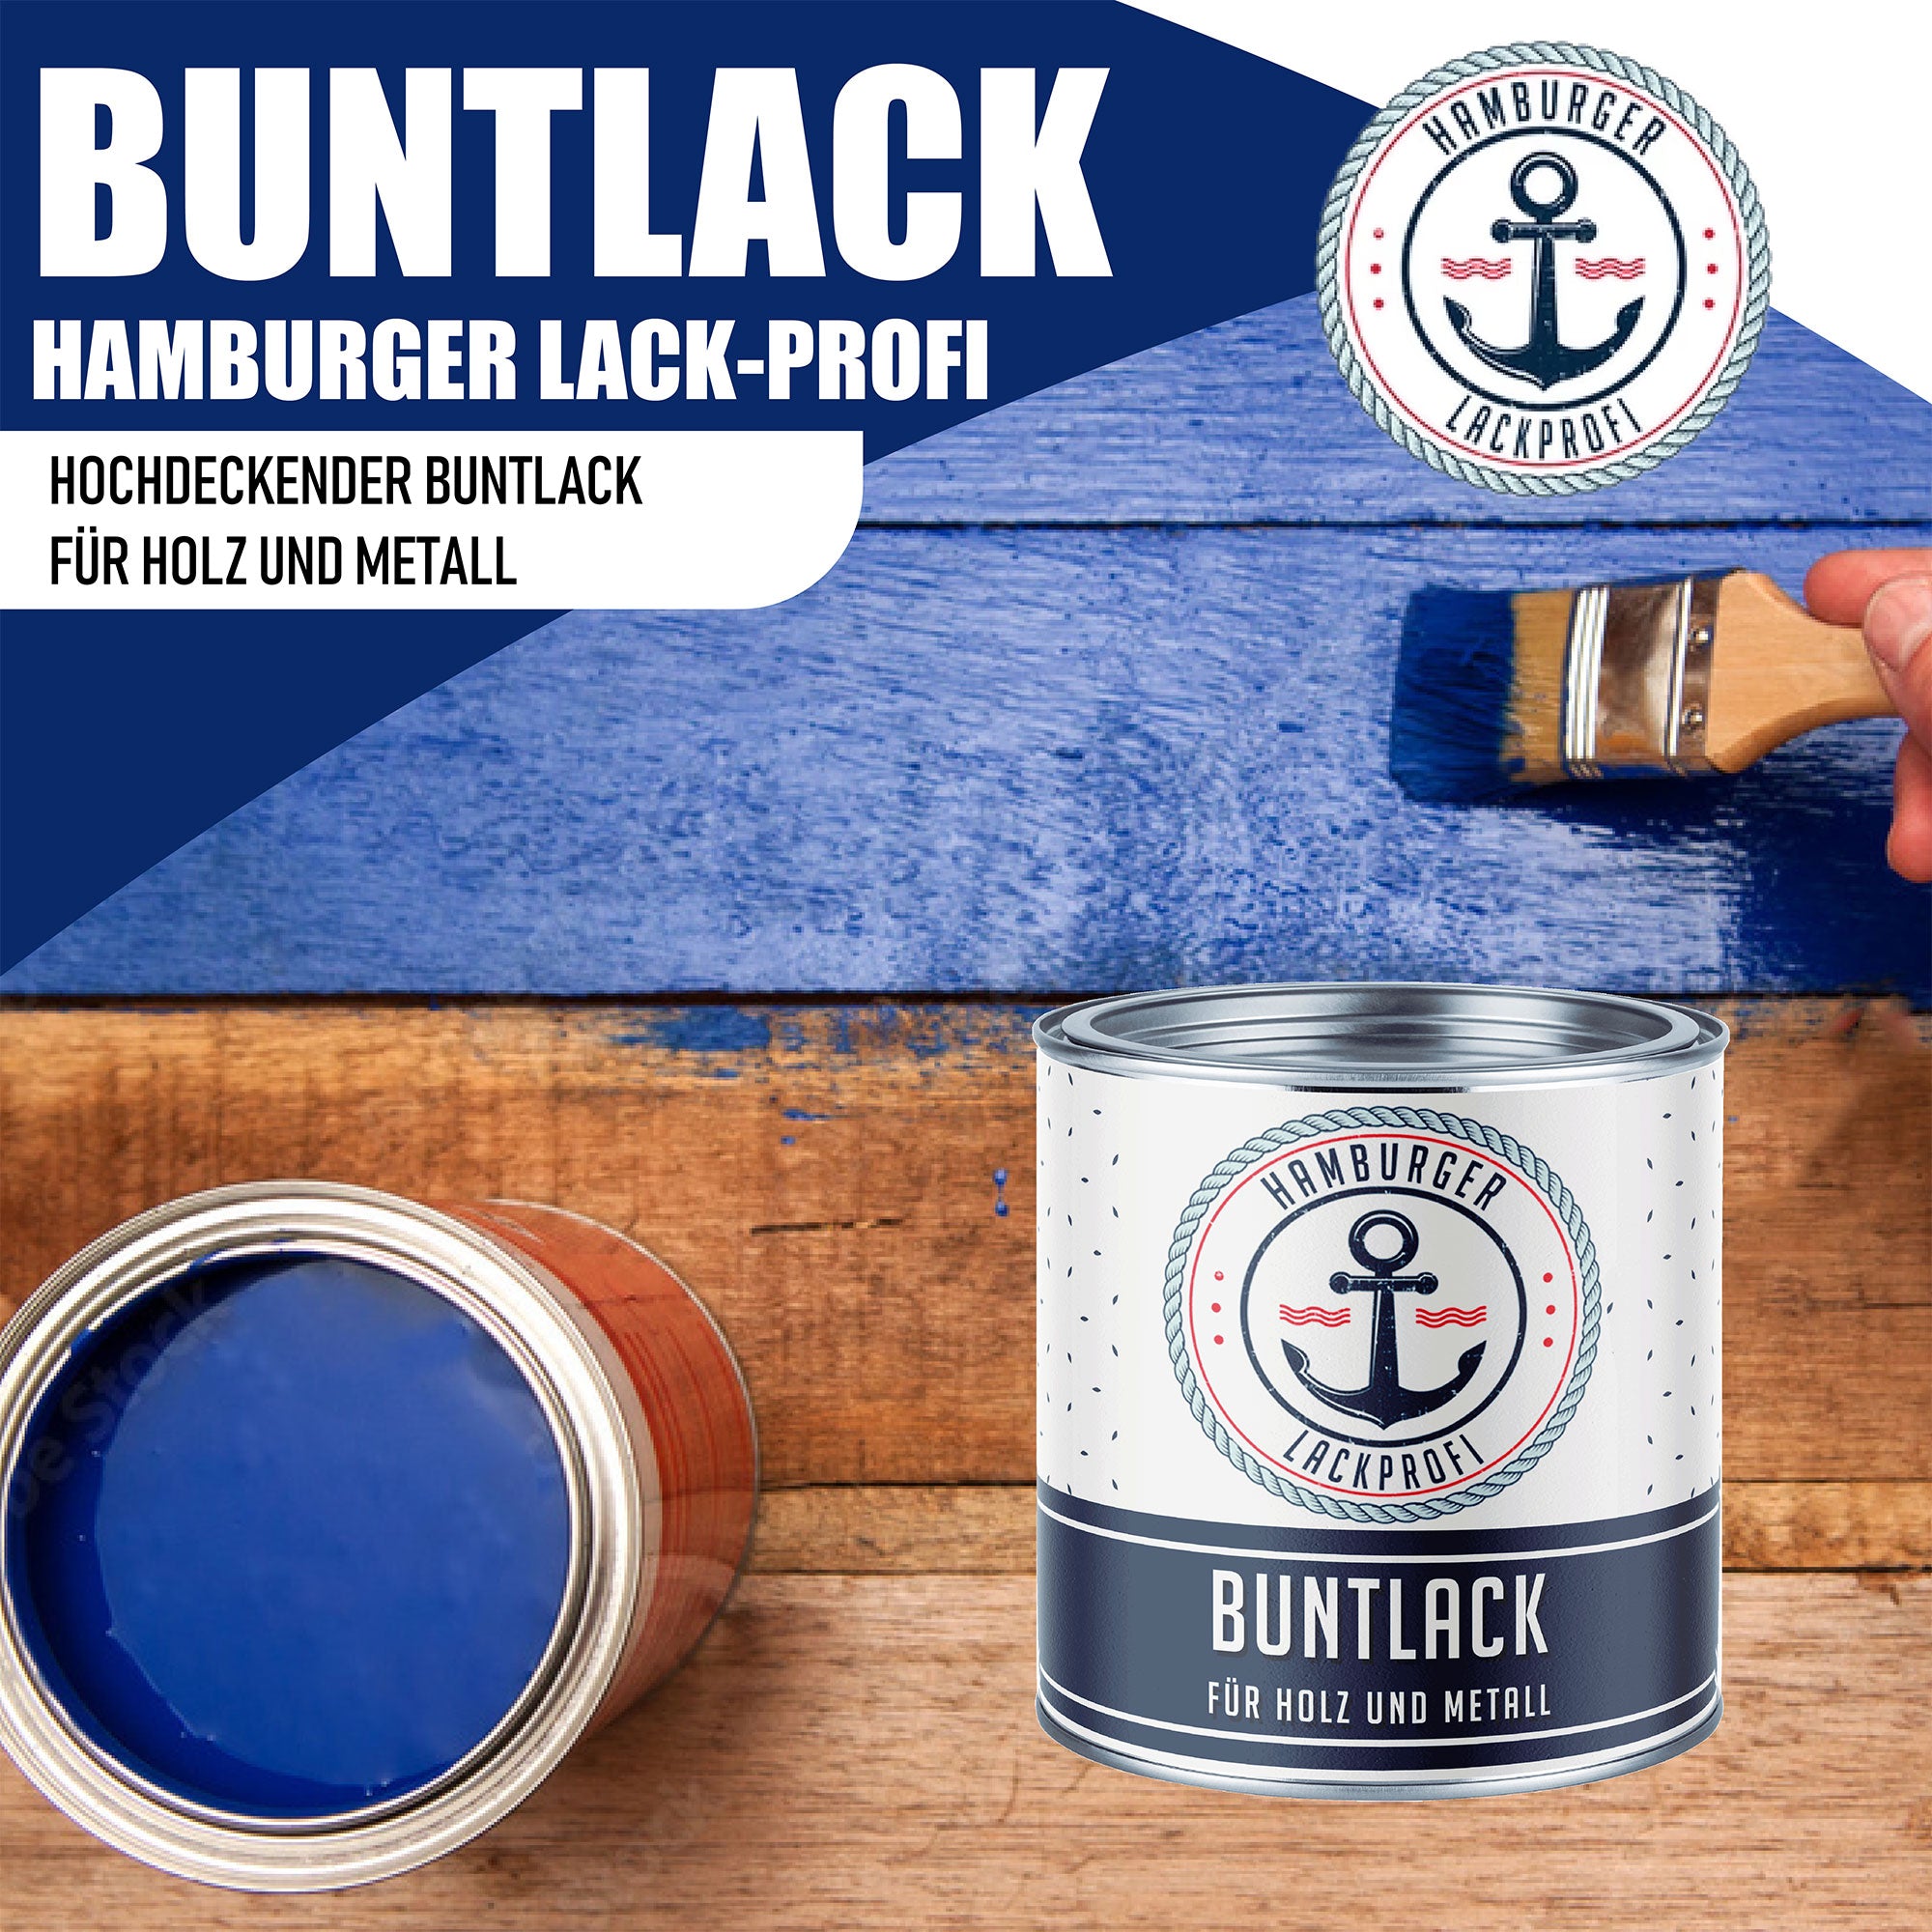 Hamburger Lack-Profi Buntlack Purpurrot RAL 3004 - Robuster Kunstharzlack